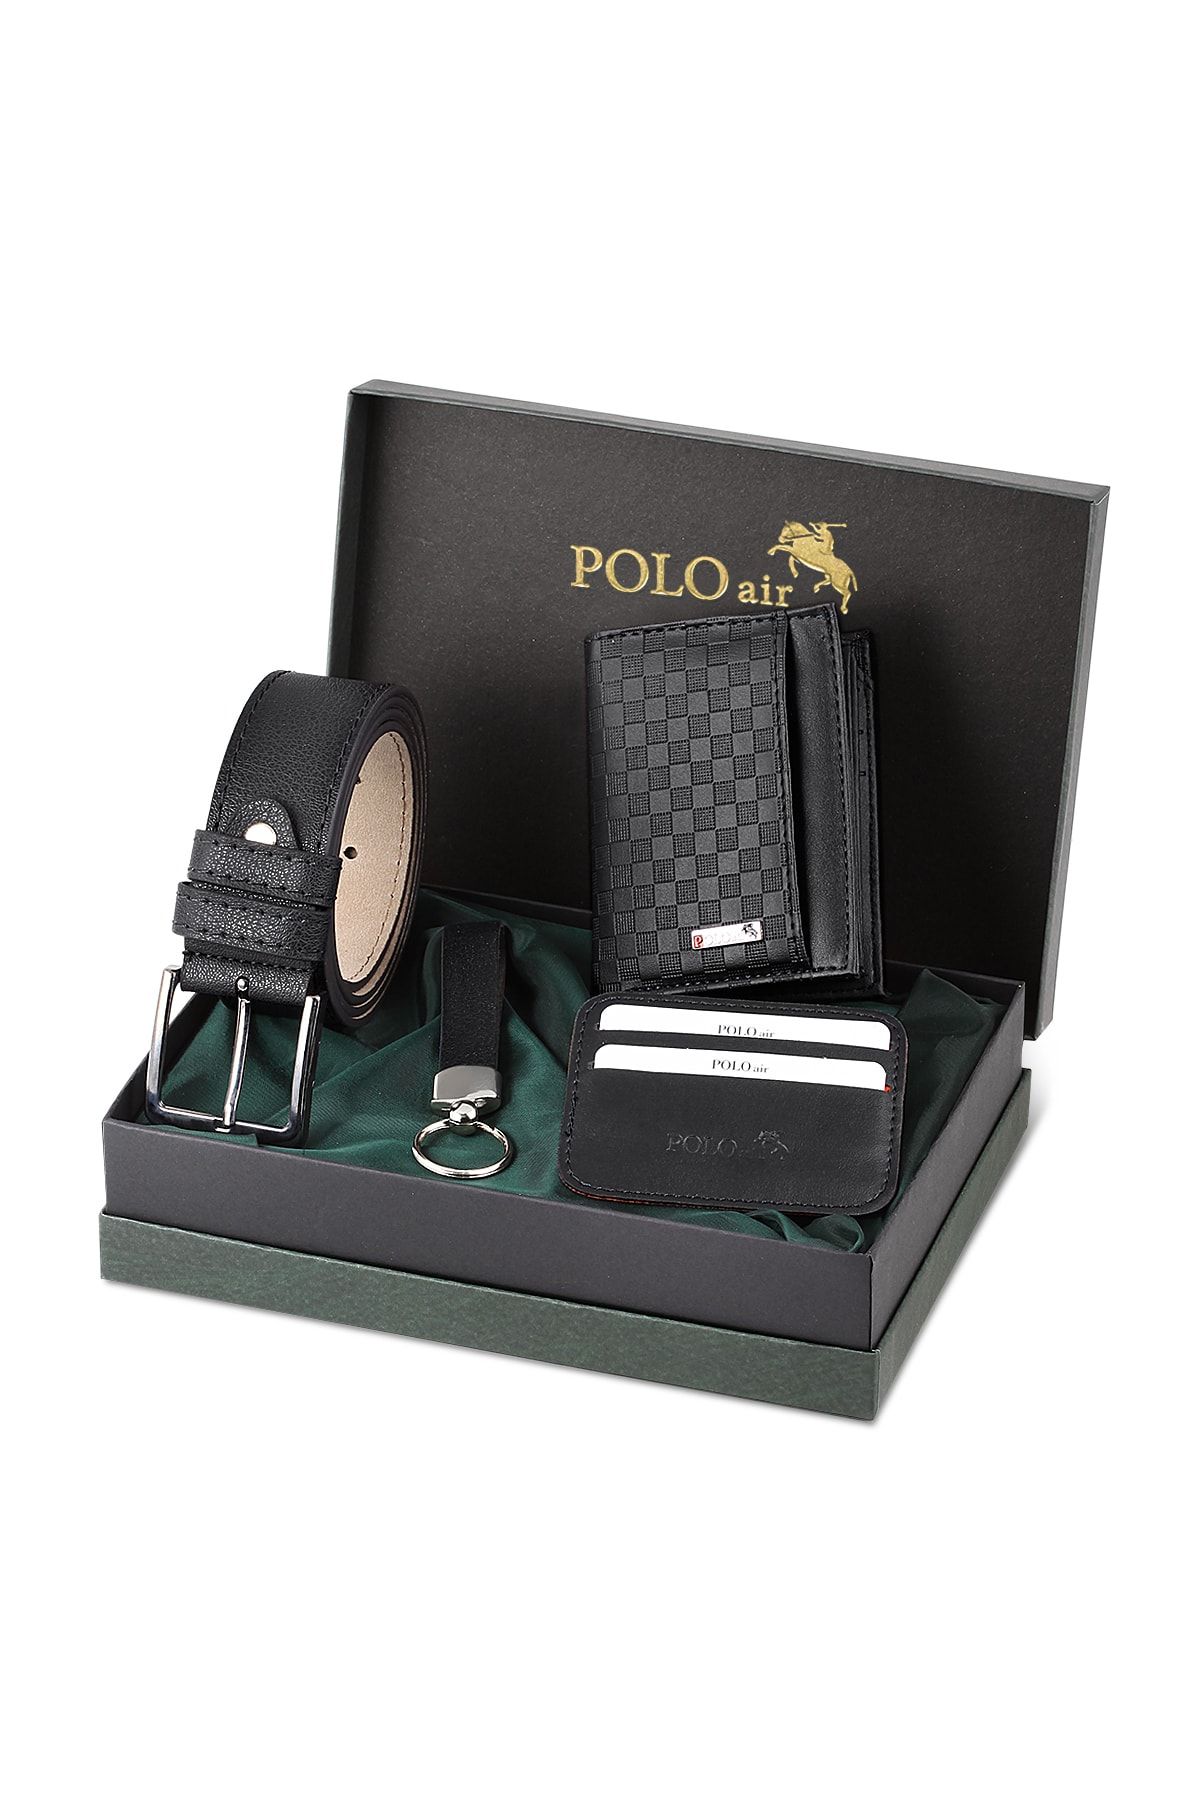 polo air Dama Desen Cüzdan Kendinden Kartlık Kemer Anahtarlık Kombin Siyah Set